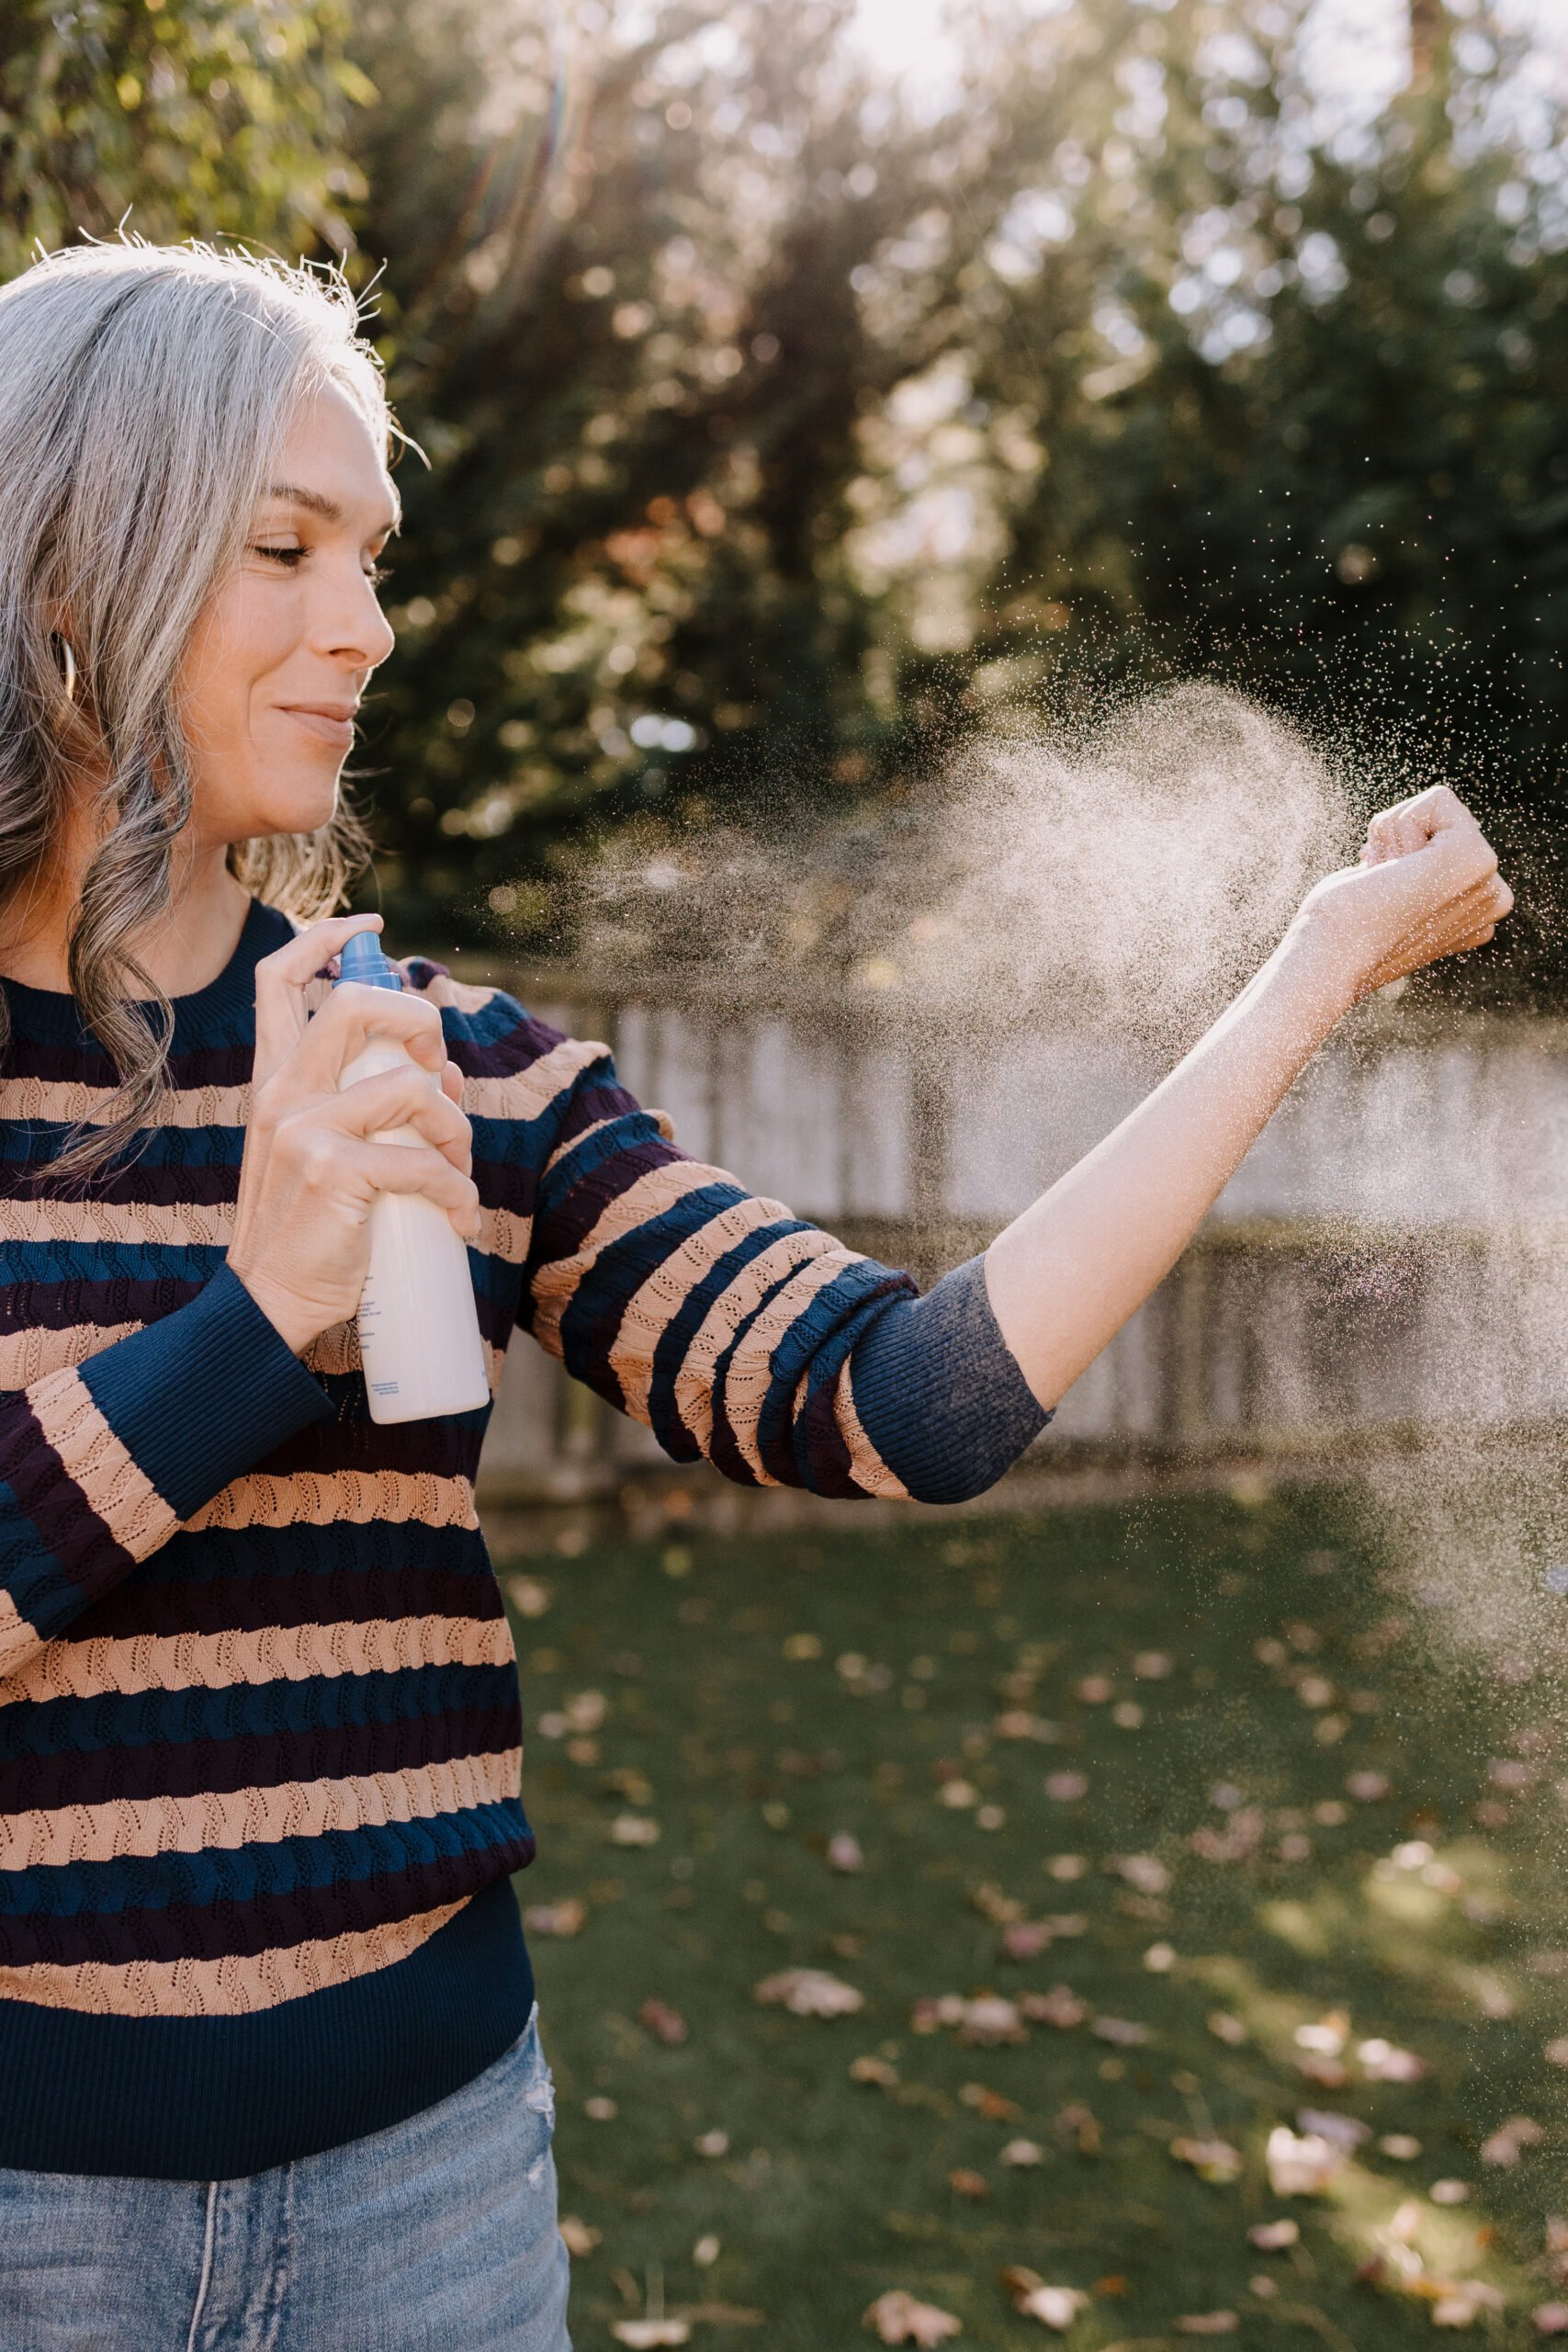 A woman sprays Magic Molecule onto her arm.